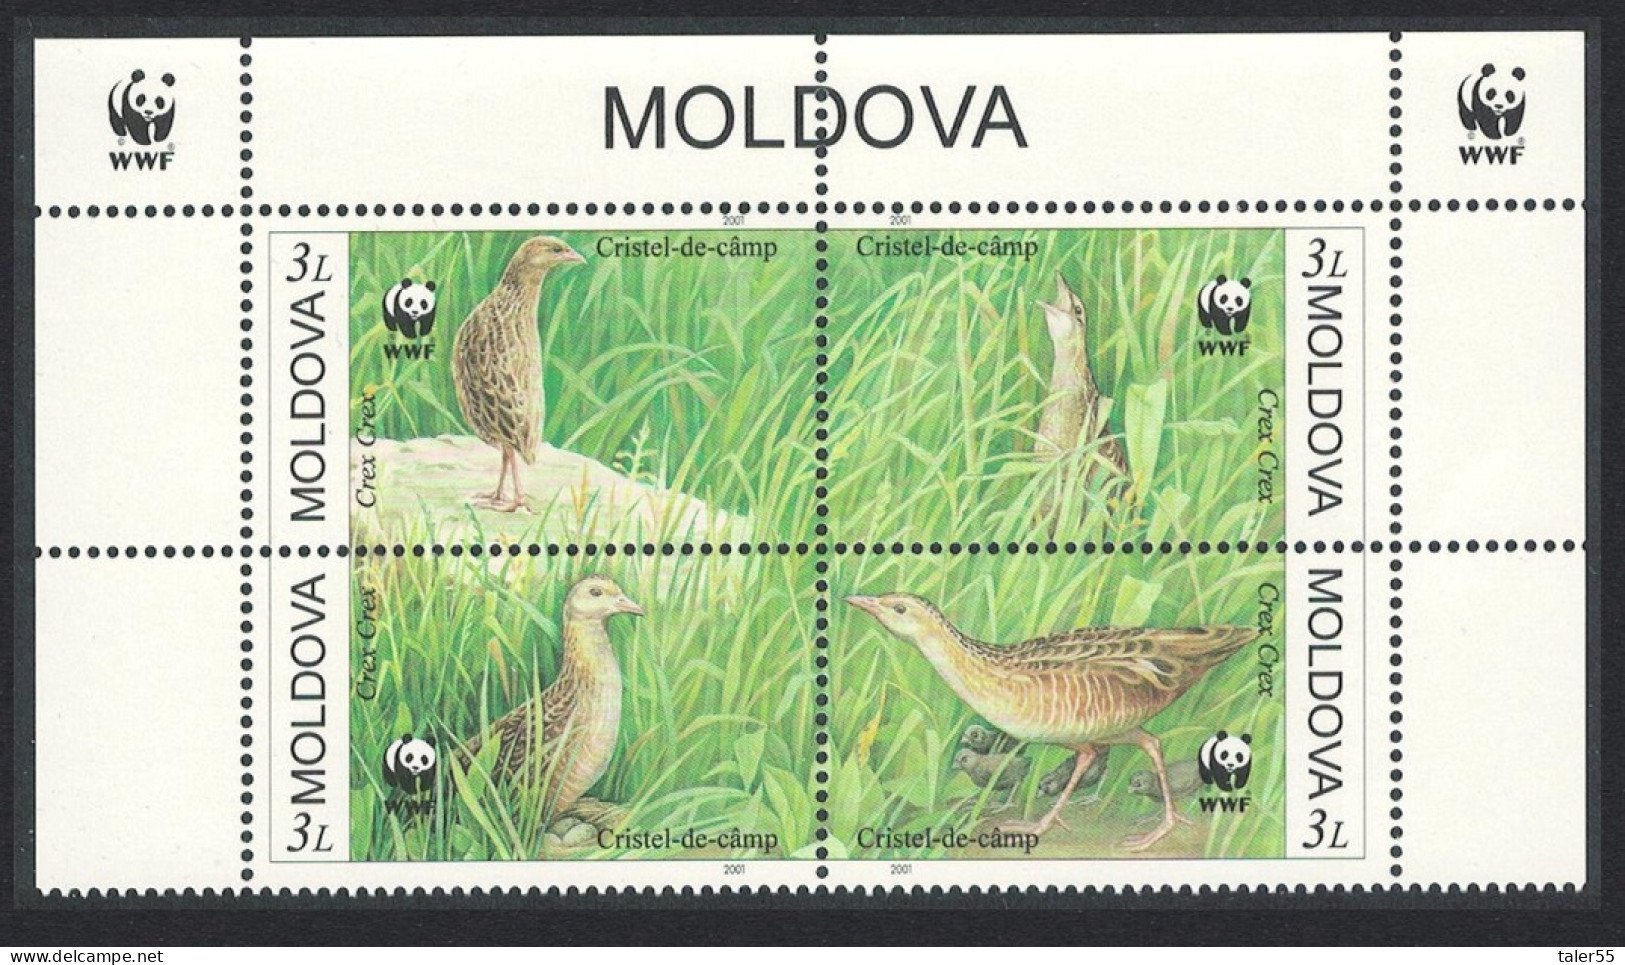 Moldova Endangered Species Corncrake Bird 4v Top Block Of 4 WWF Logo 2001 MNH SG#382-385 Sc#370 - Moldova